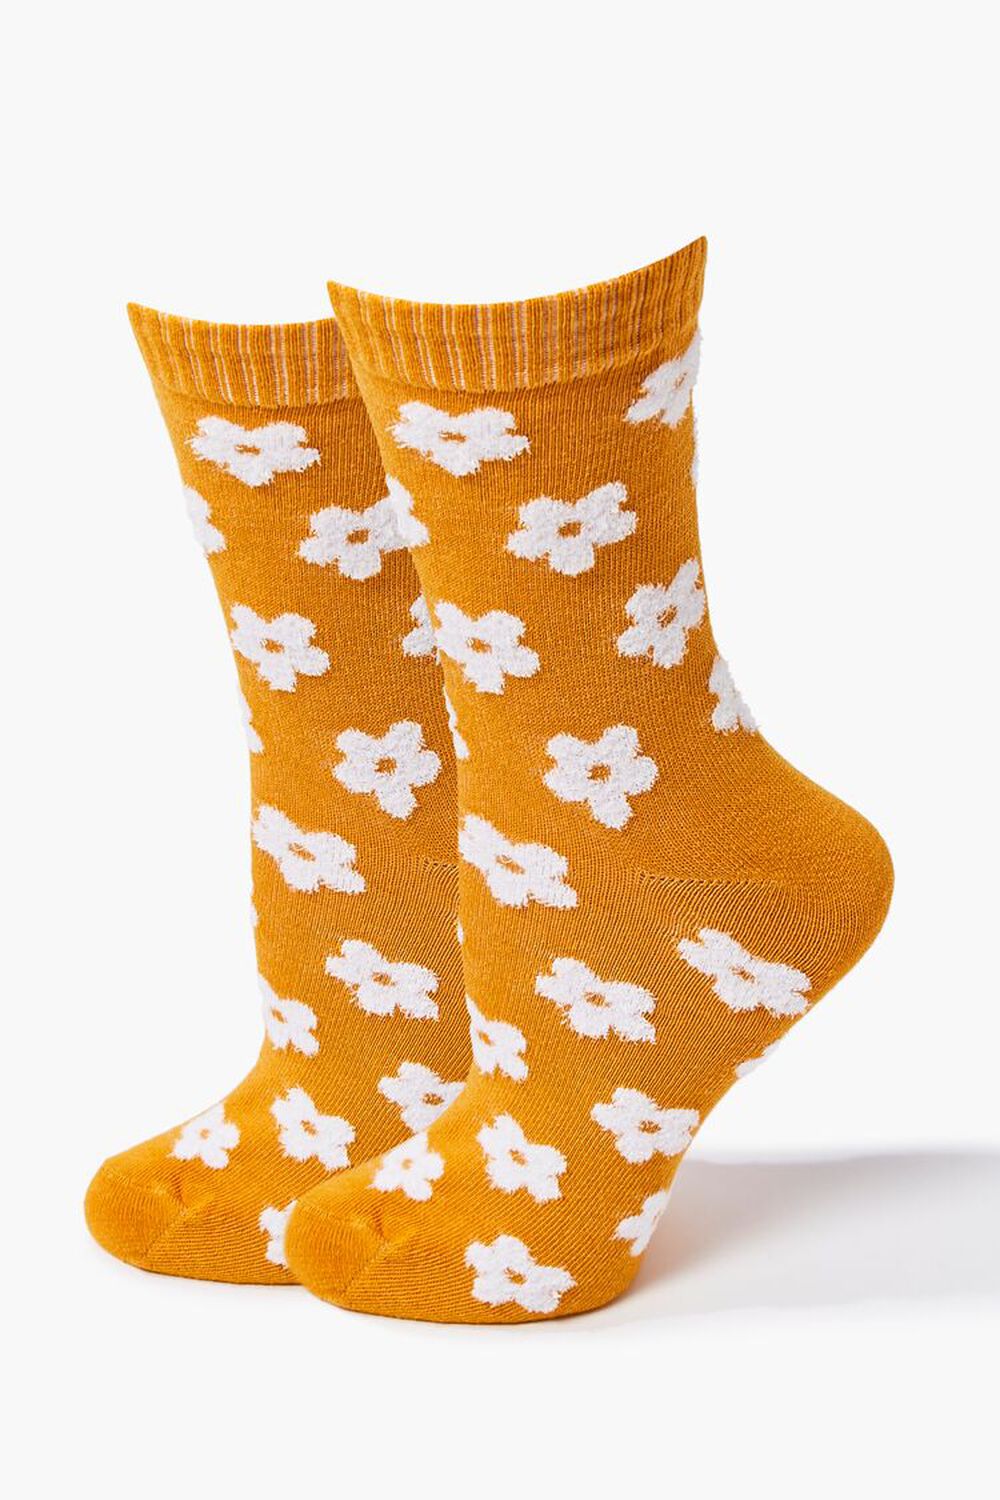 MUSTARD/WHITE Daisy Print Crew Socks, image 1